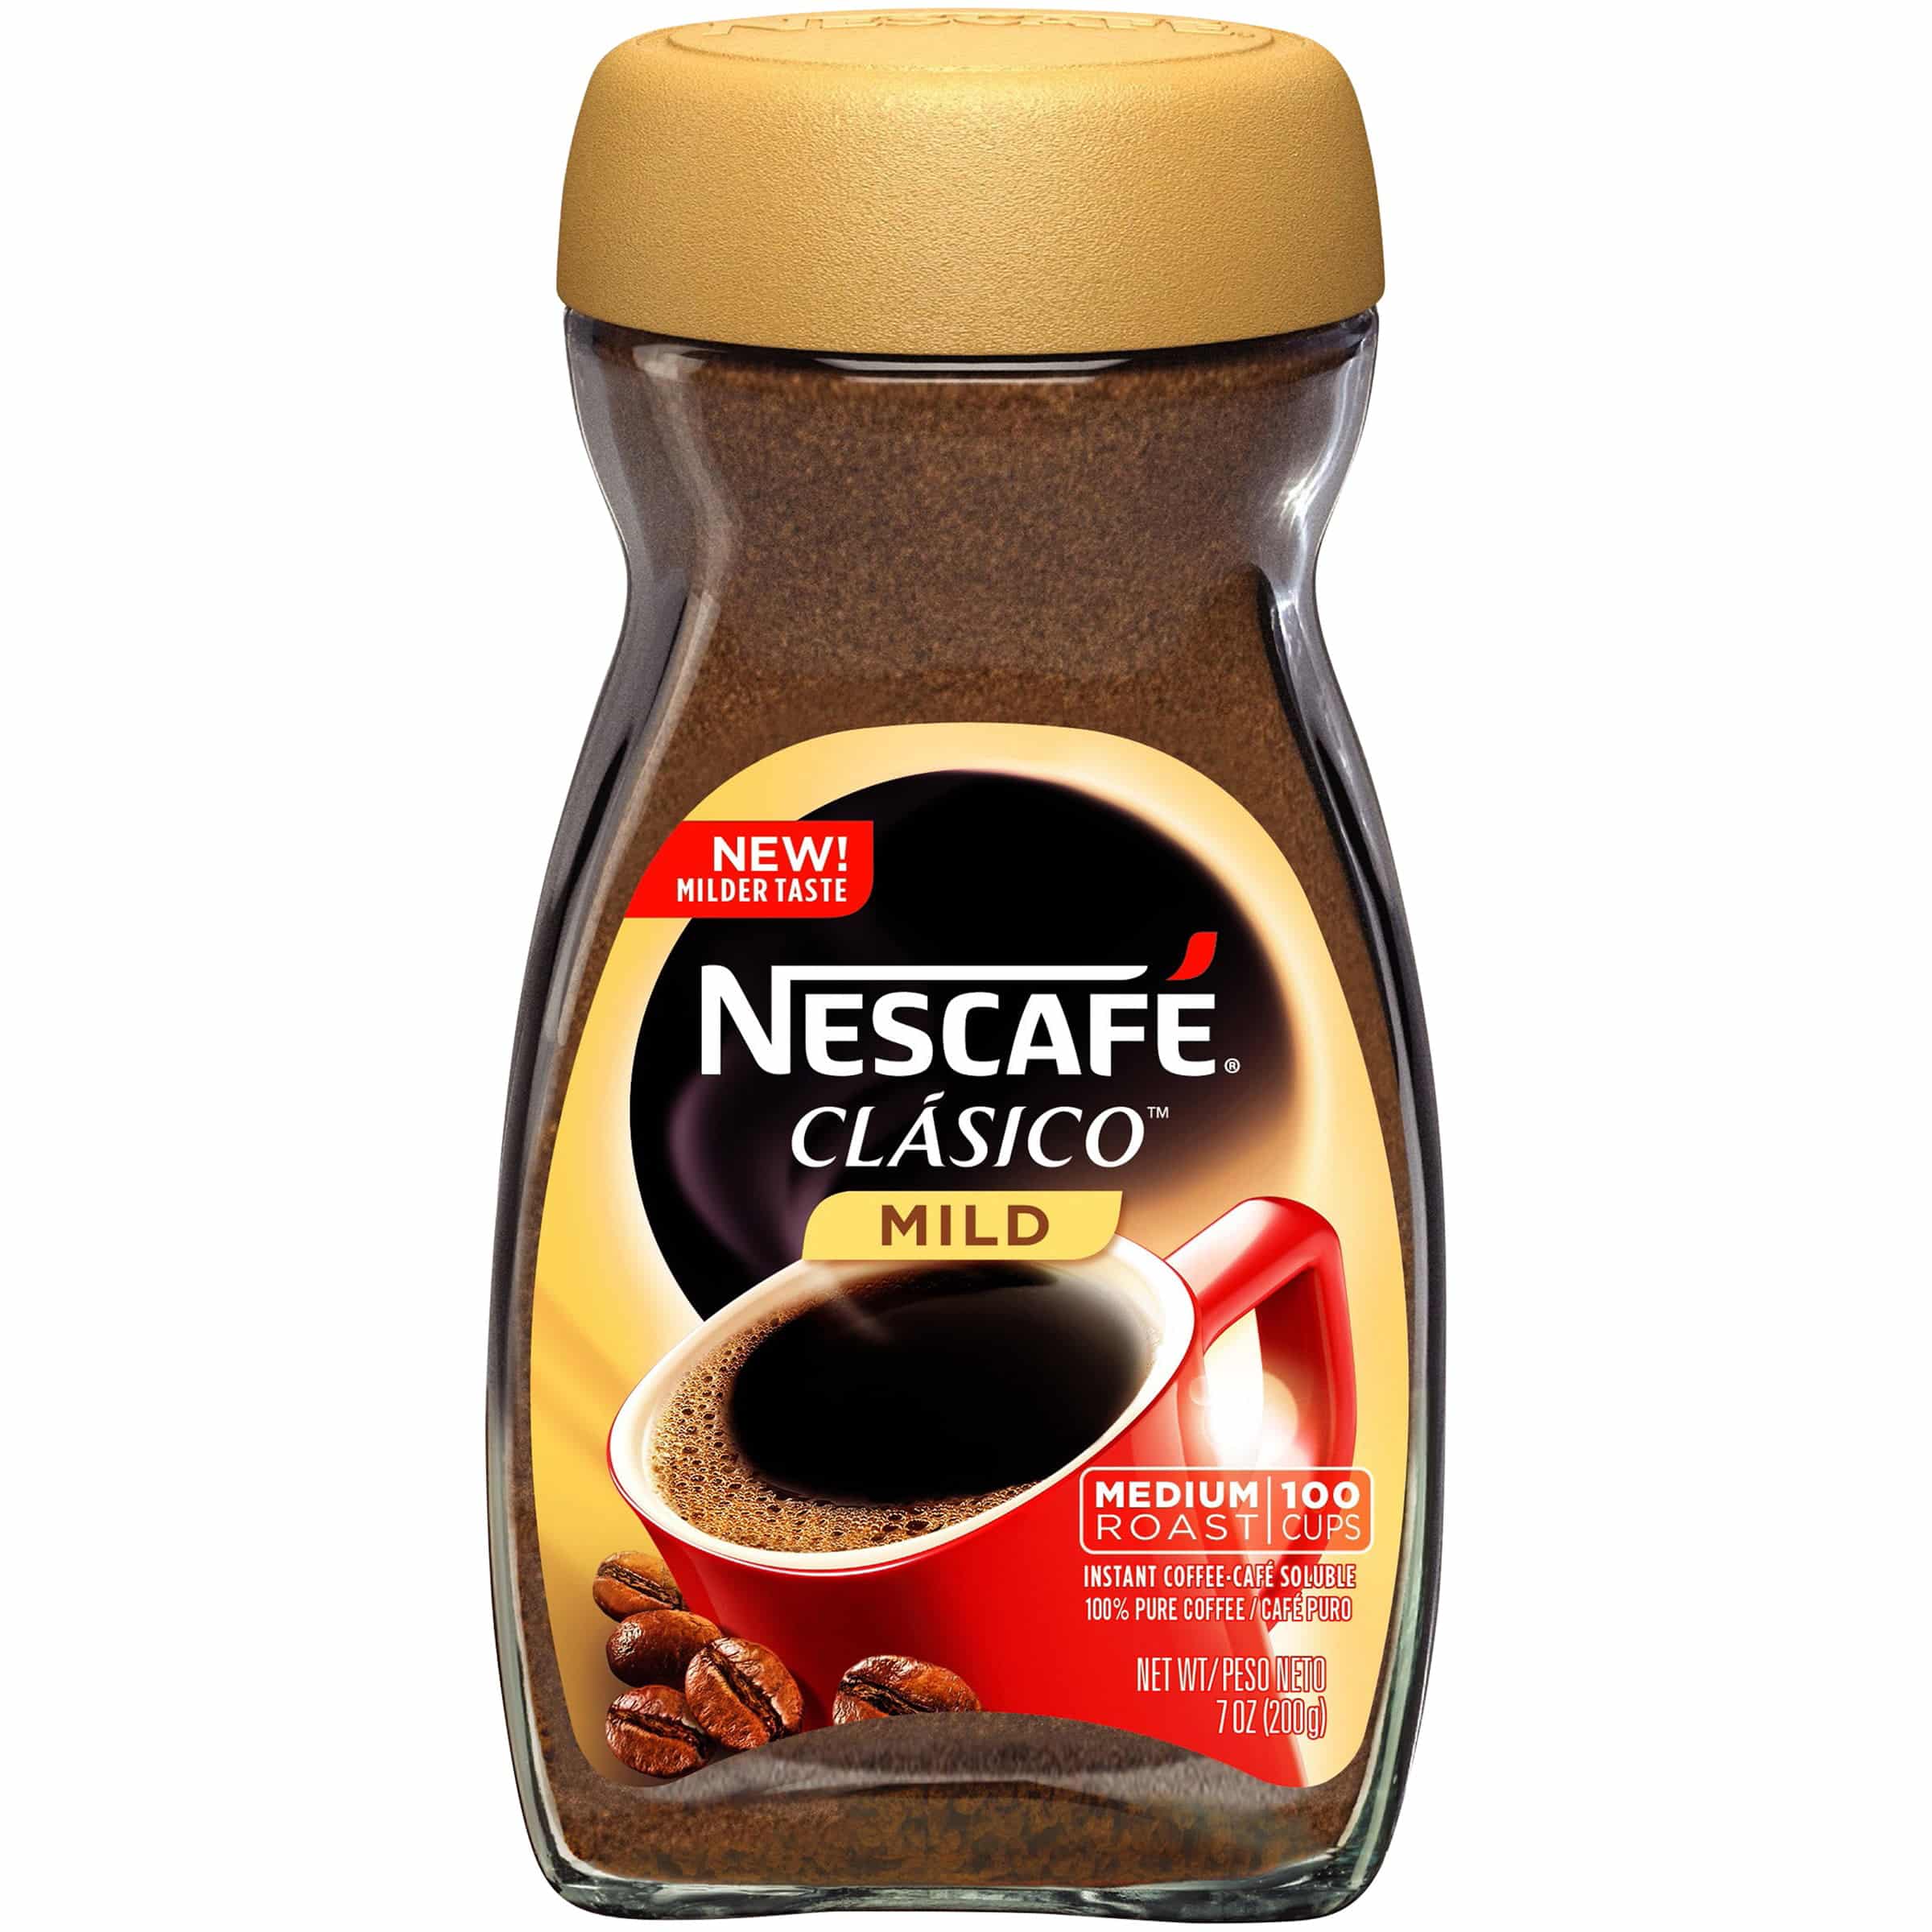 Nescafe Instant Coffee Caffeine Content / Nescafe Black Roast Instant ...